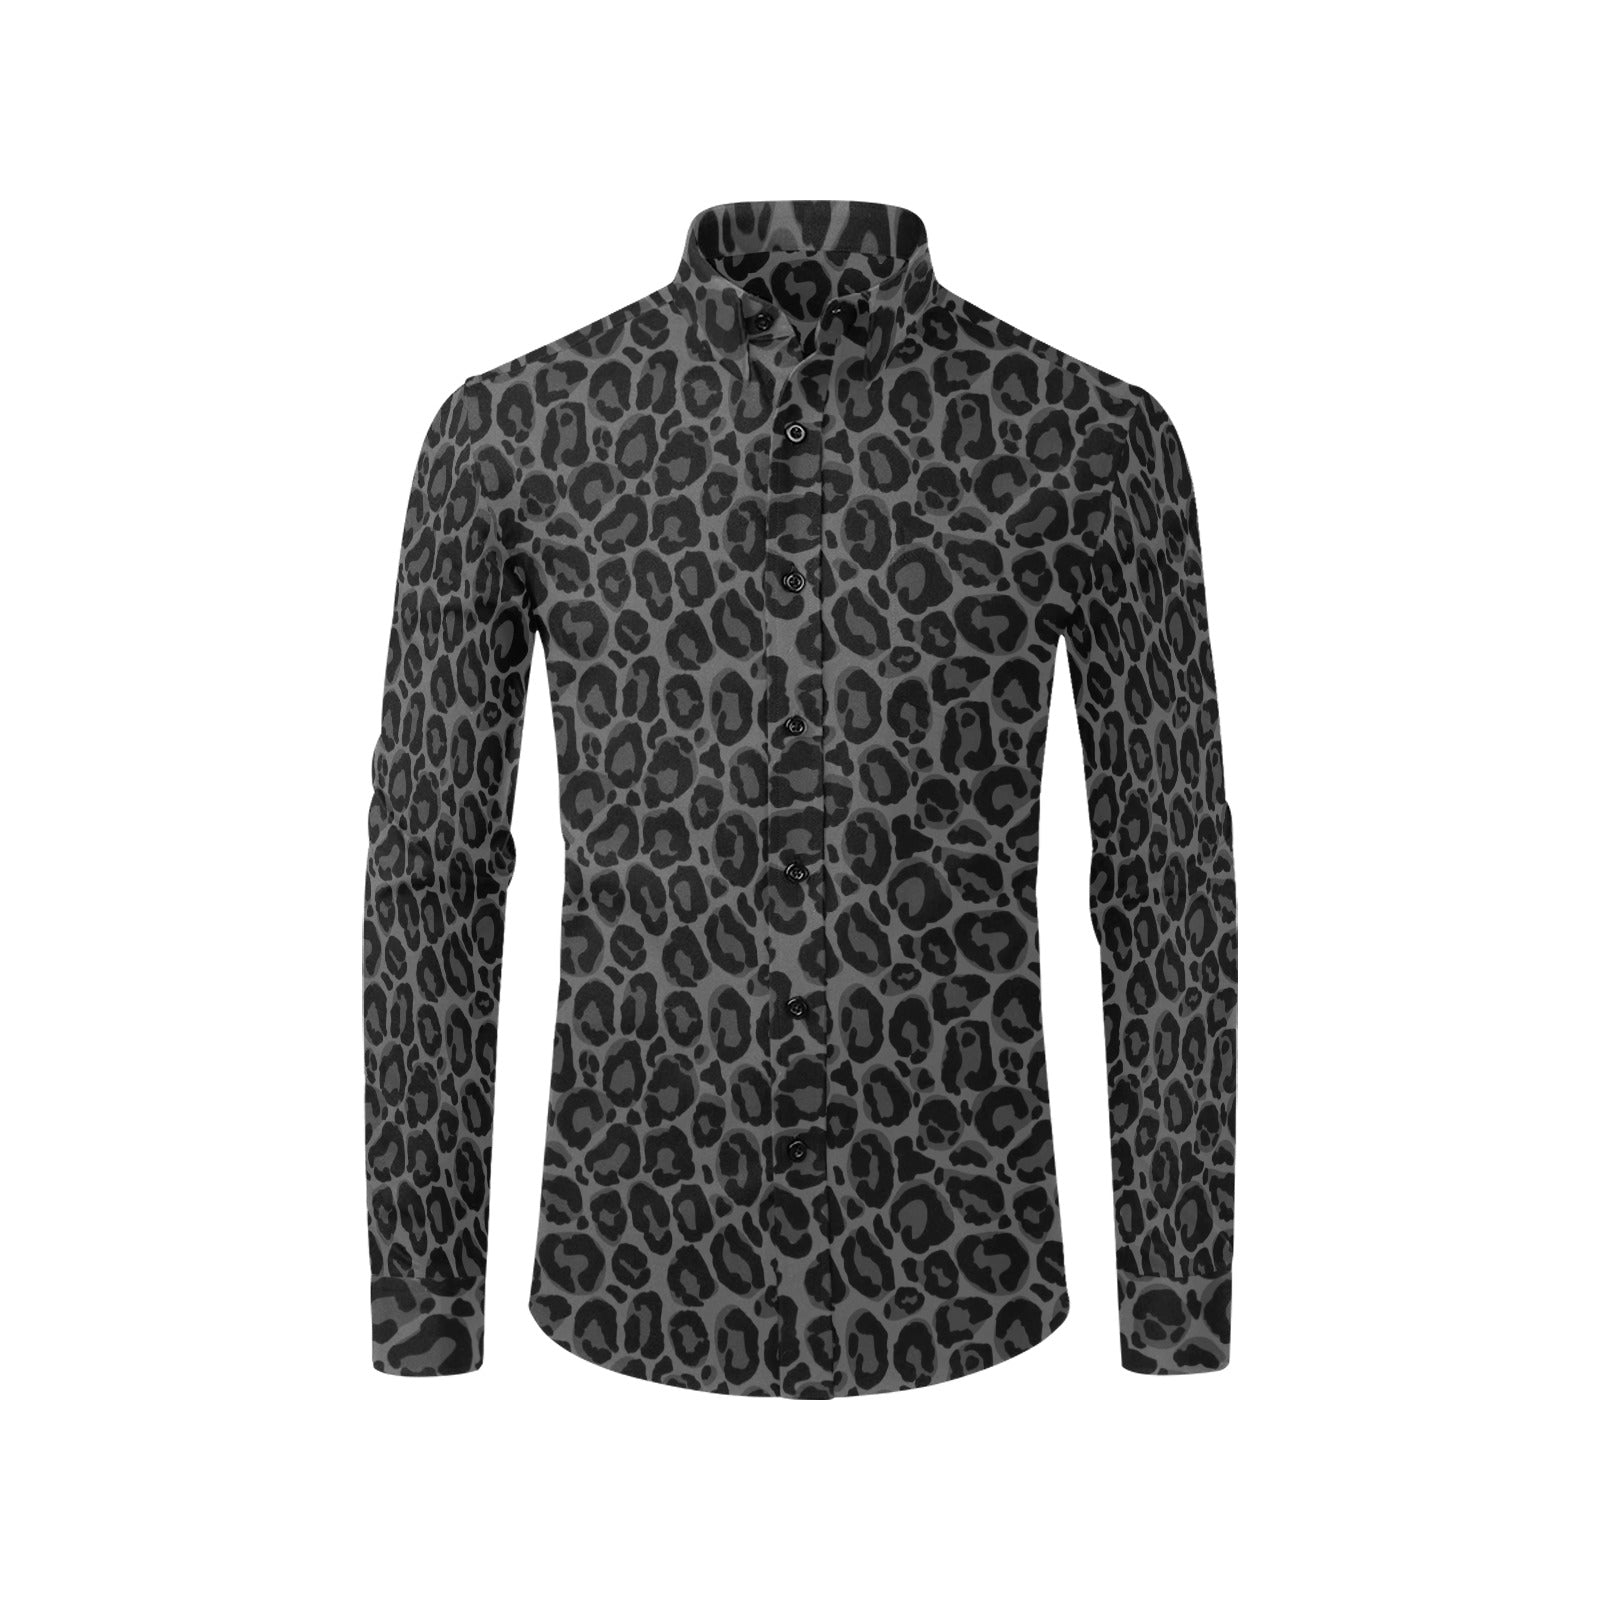 Black Leopard Men Button Up Shirt, Long Sleeve cheetah Animals Print Grey Buttoned Collar Dress Shirt with Chest Pocket Starcove Fashion